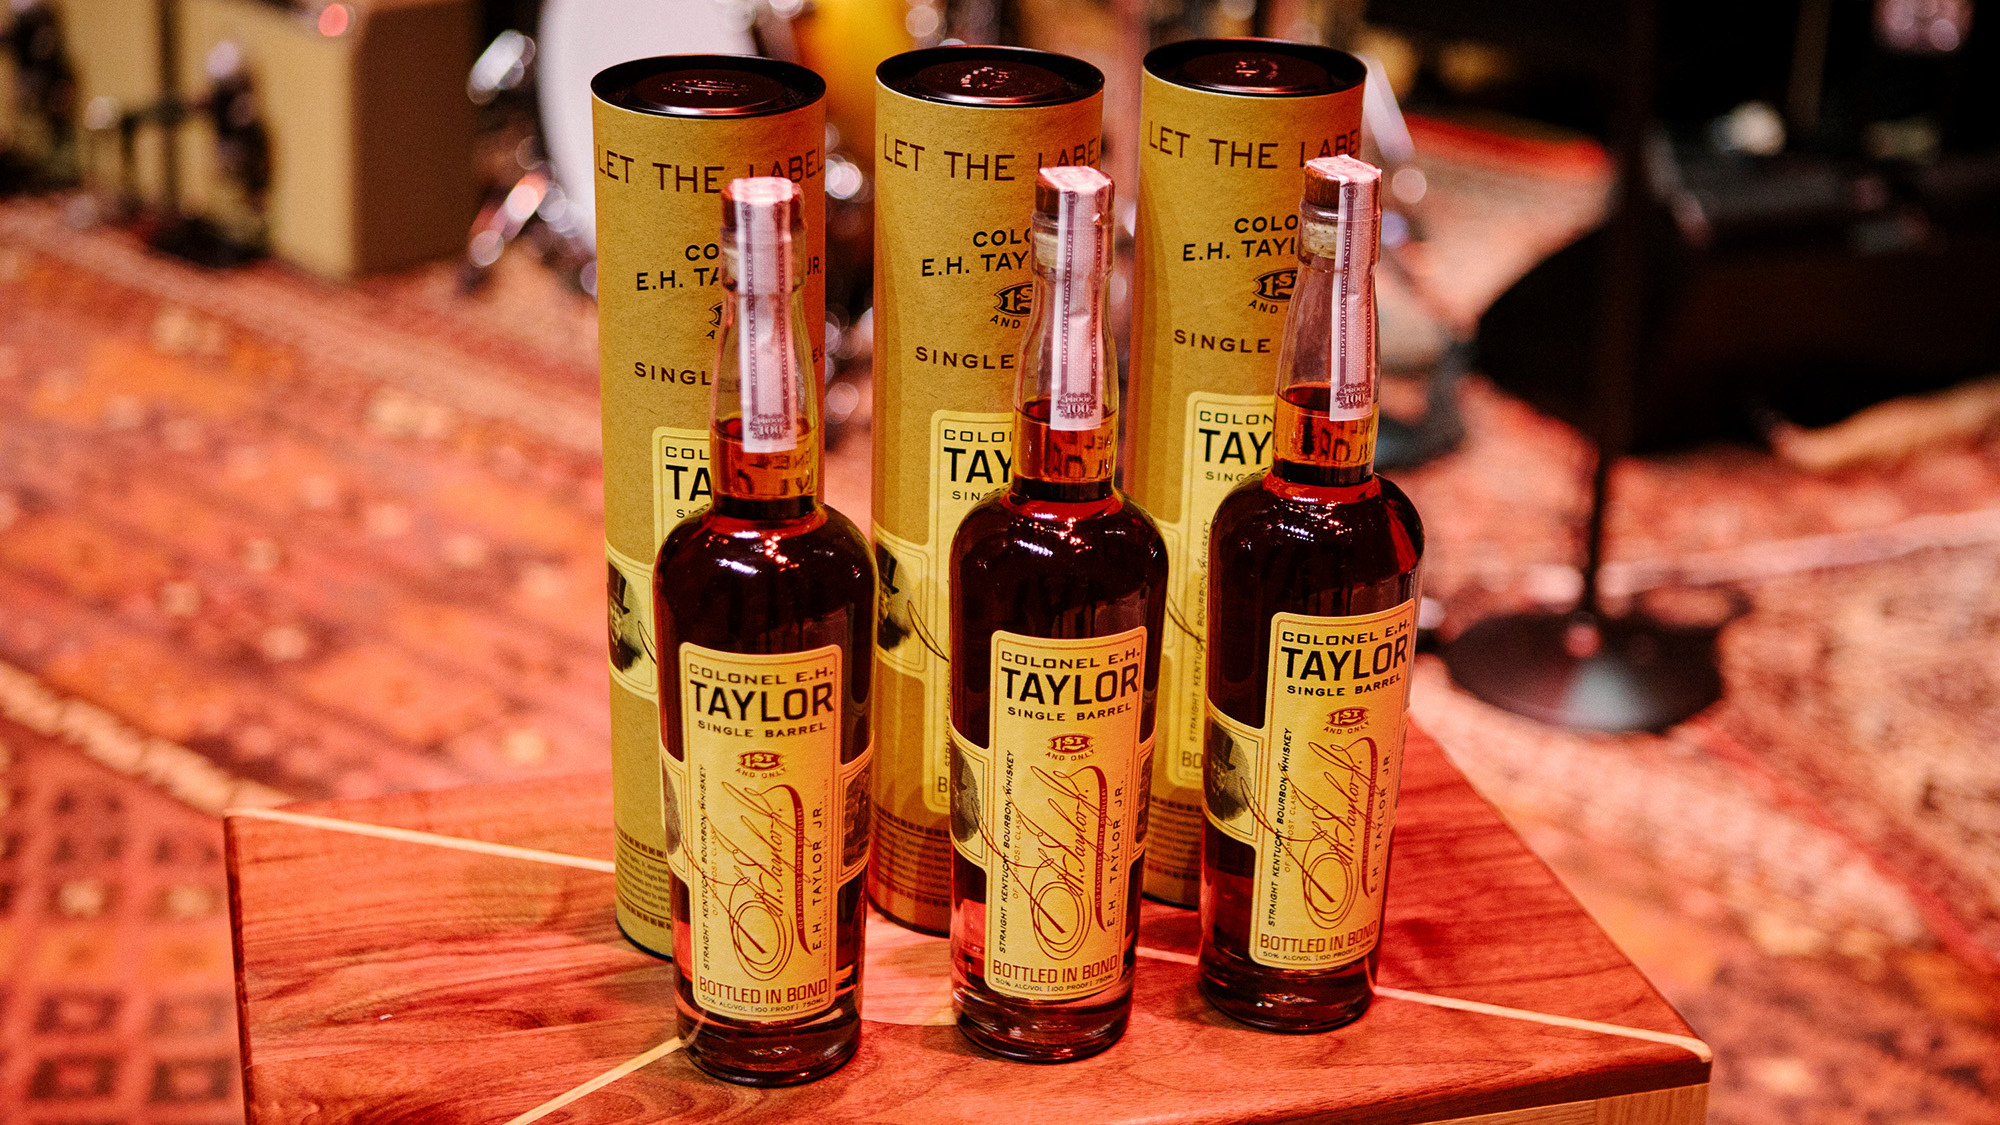 E. H. Taylor, Jr Bourbon Releases Chris Stapleton Selected Single Barrel To Celebrate 125th Anniversary Of Bottled In Bond Day